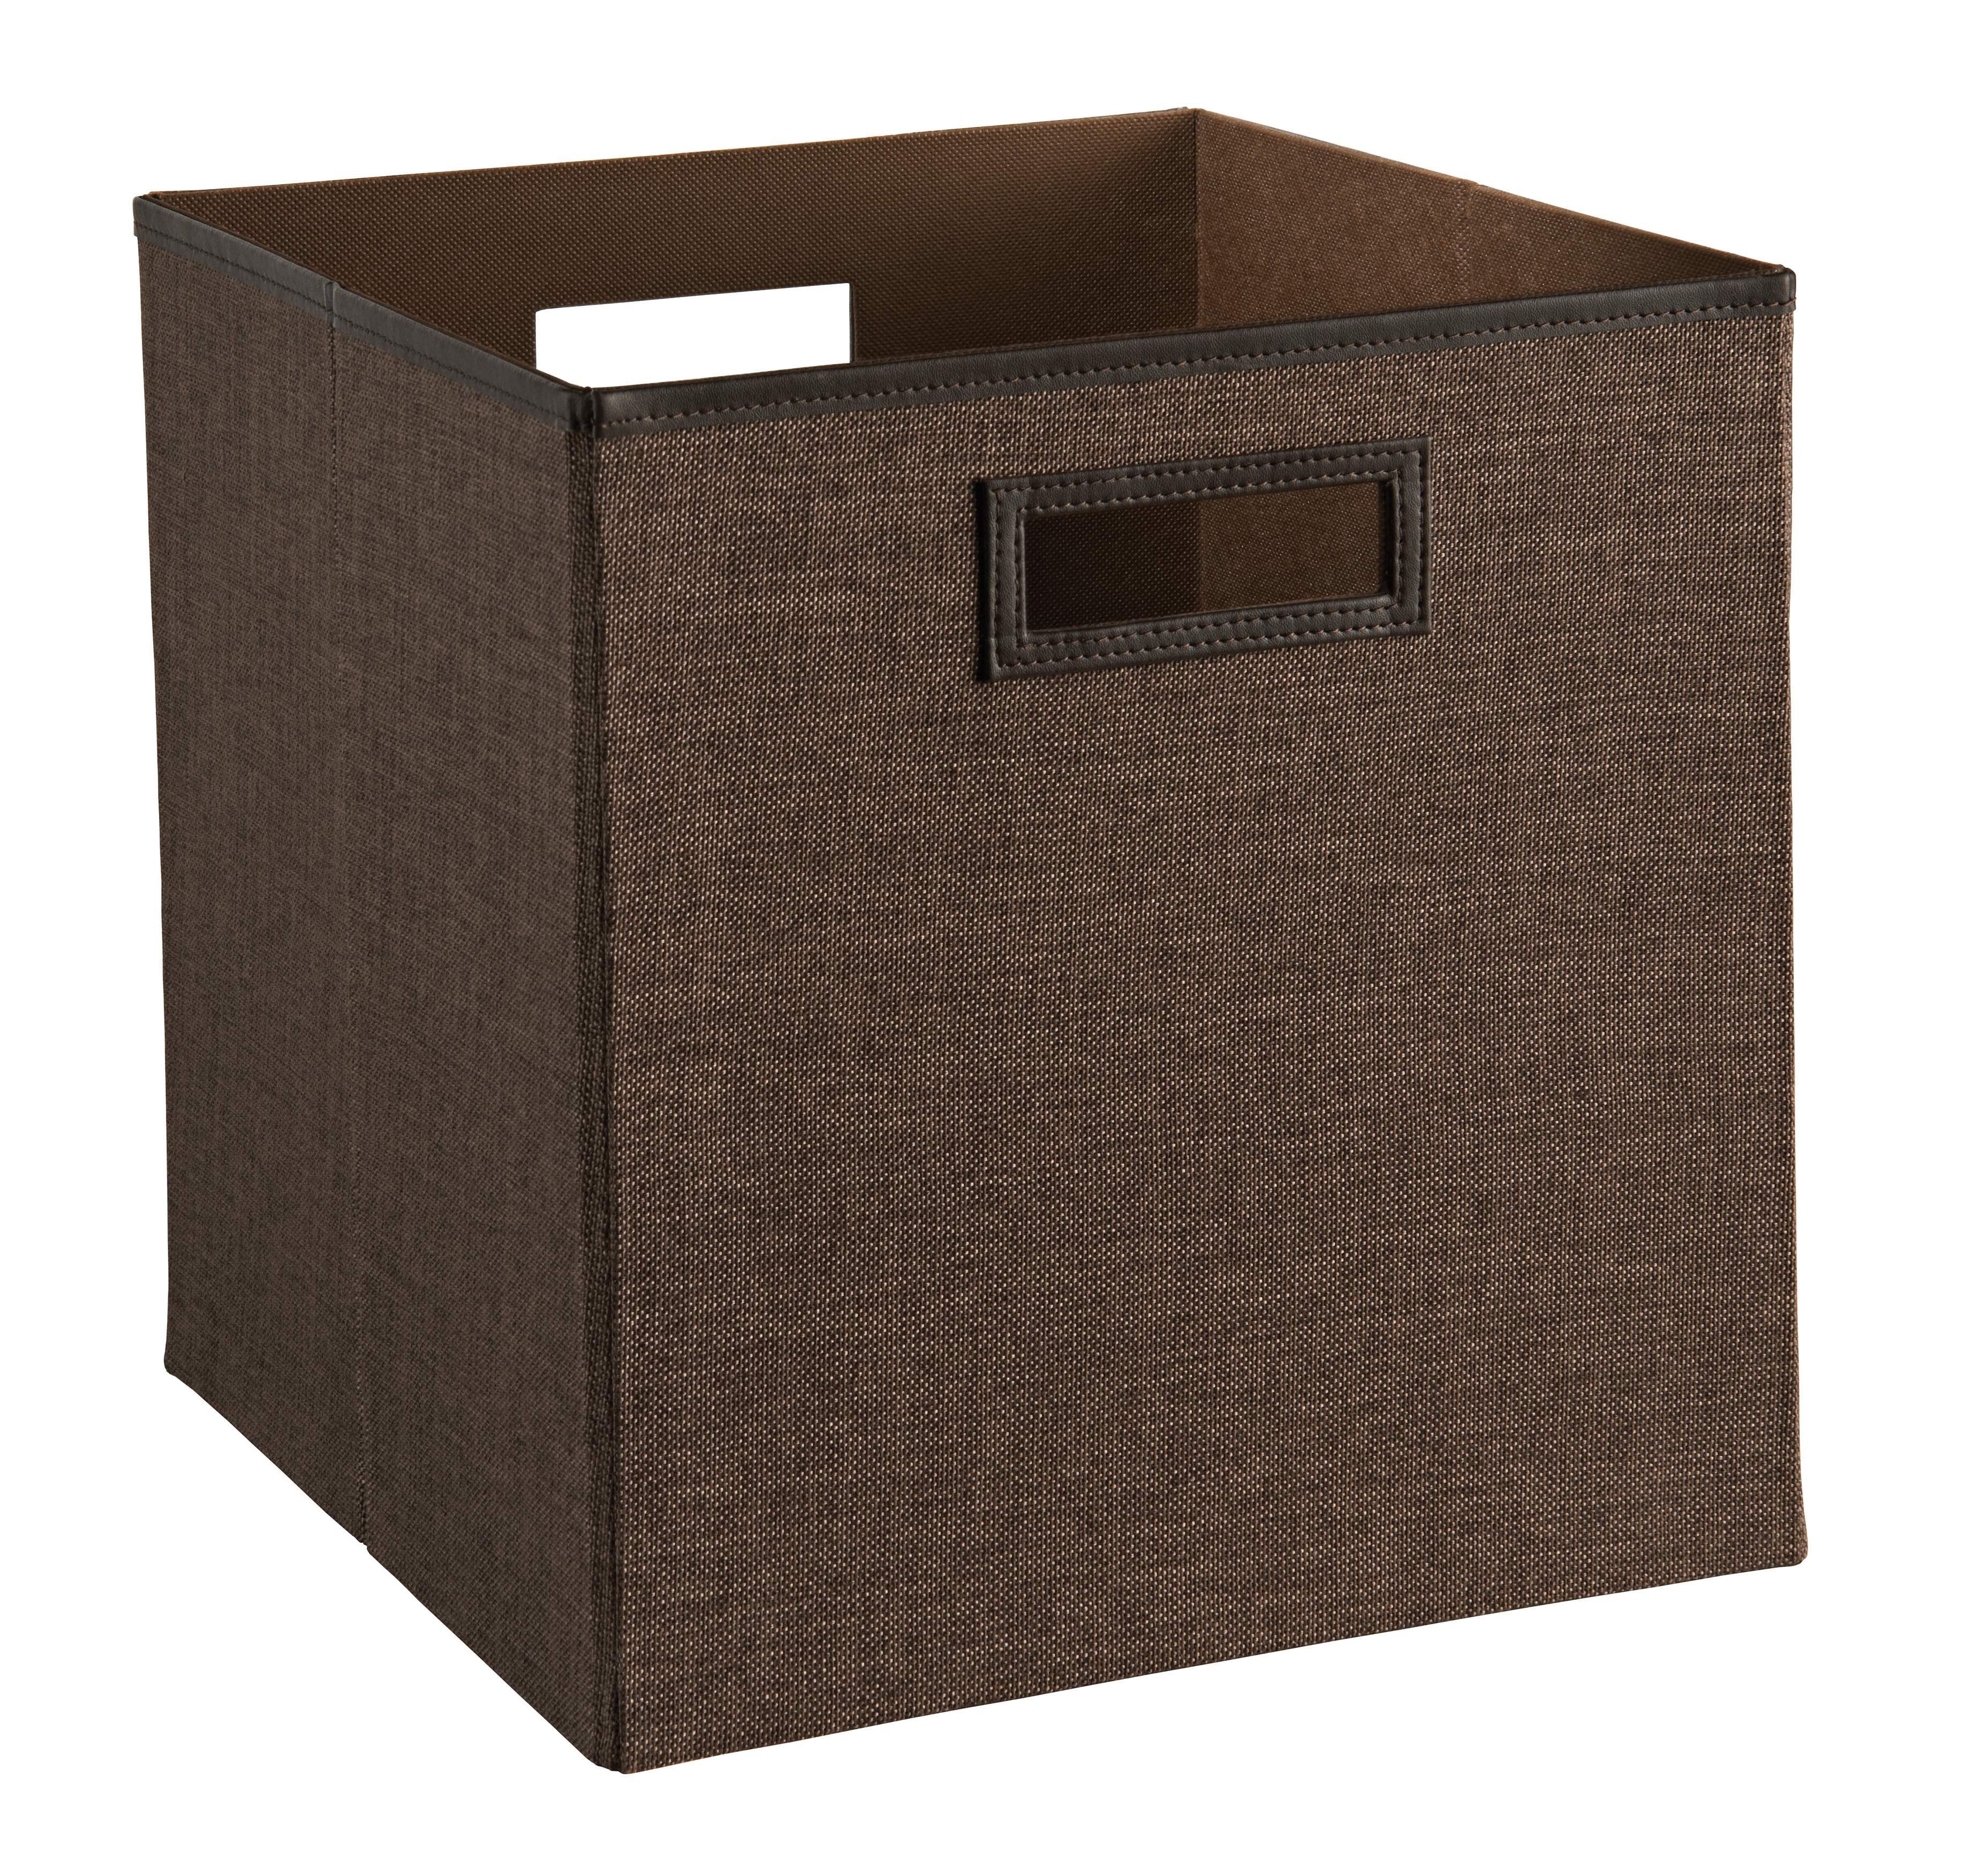 Decorative Storage Fabric Storage Bin Reviews Joss Main regarding dimensions 3713 X 3500